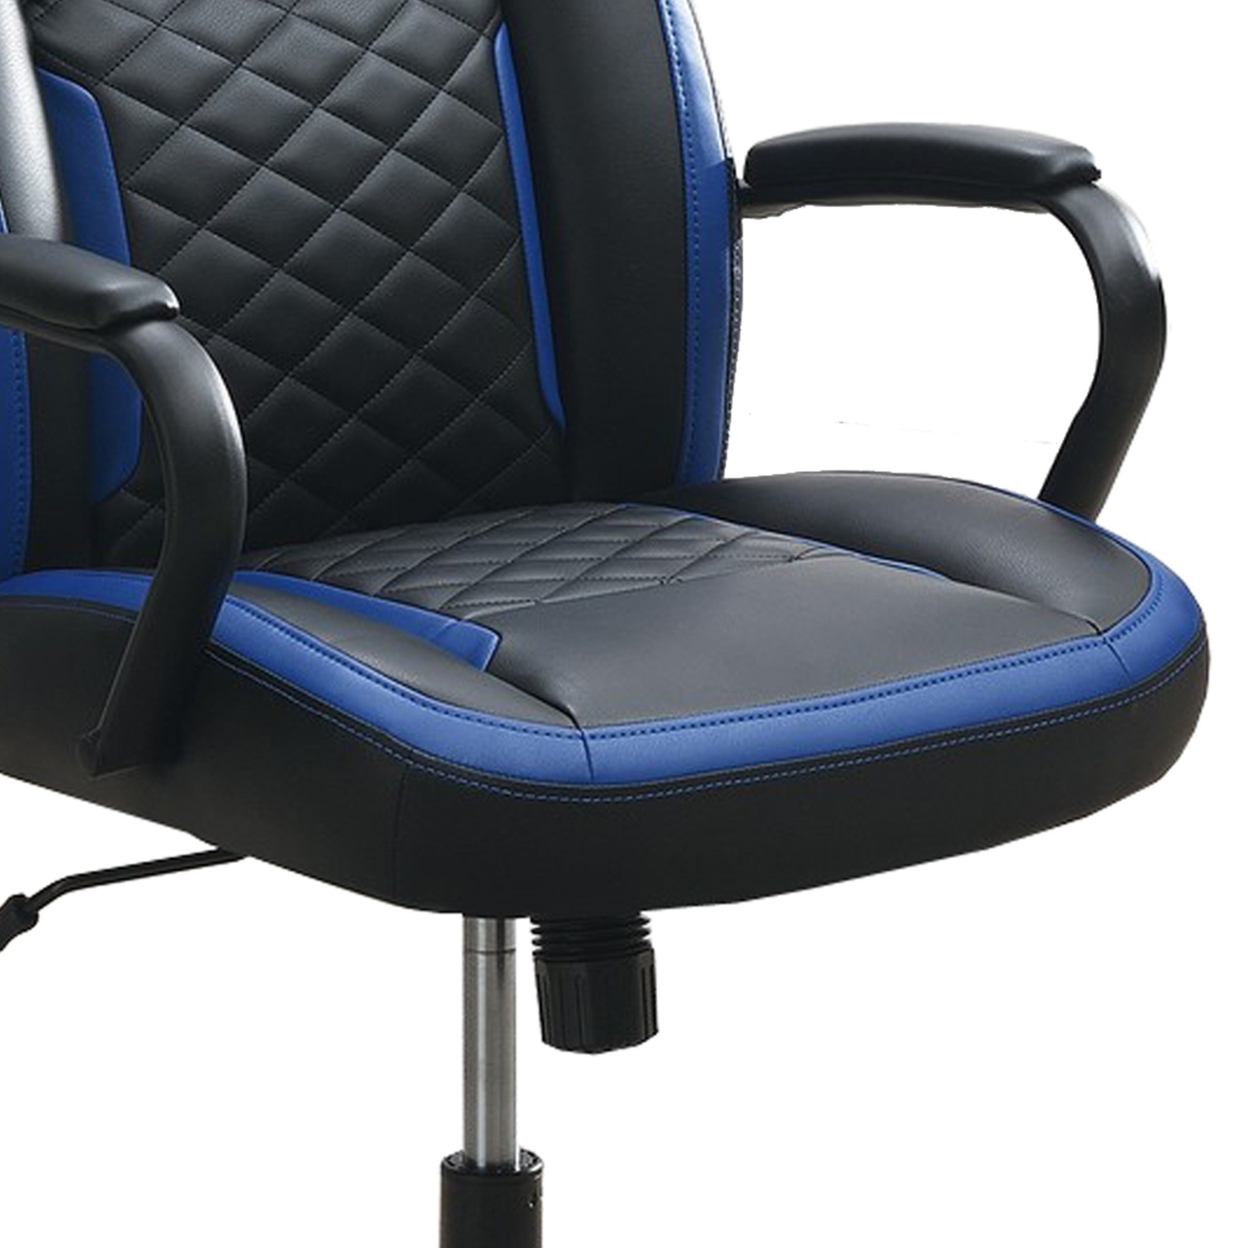 Ida 26 Inch Ergonomic Office Chair, Faux Leather Swivel Seat, Black, Blue- Saltoro Sherpi